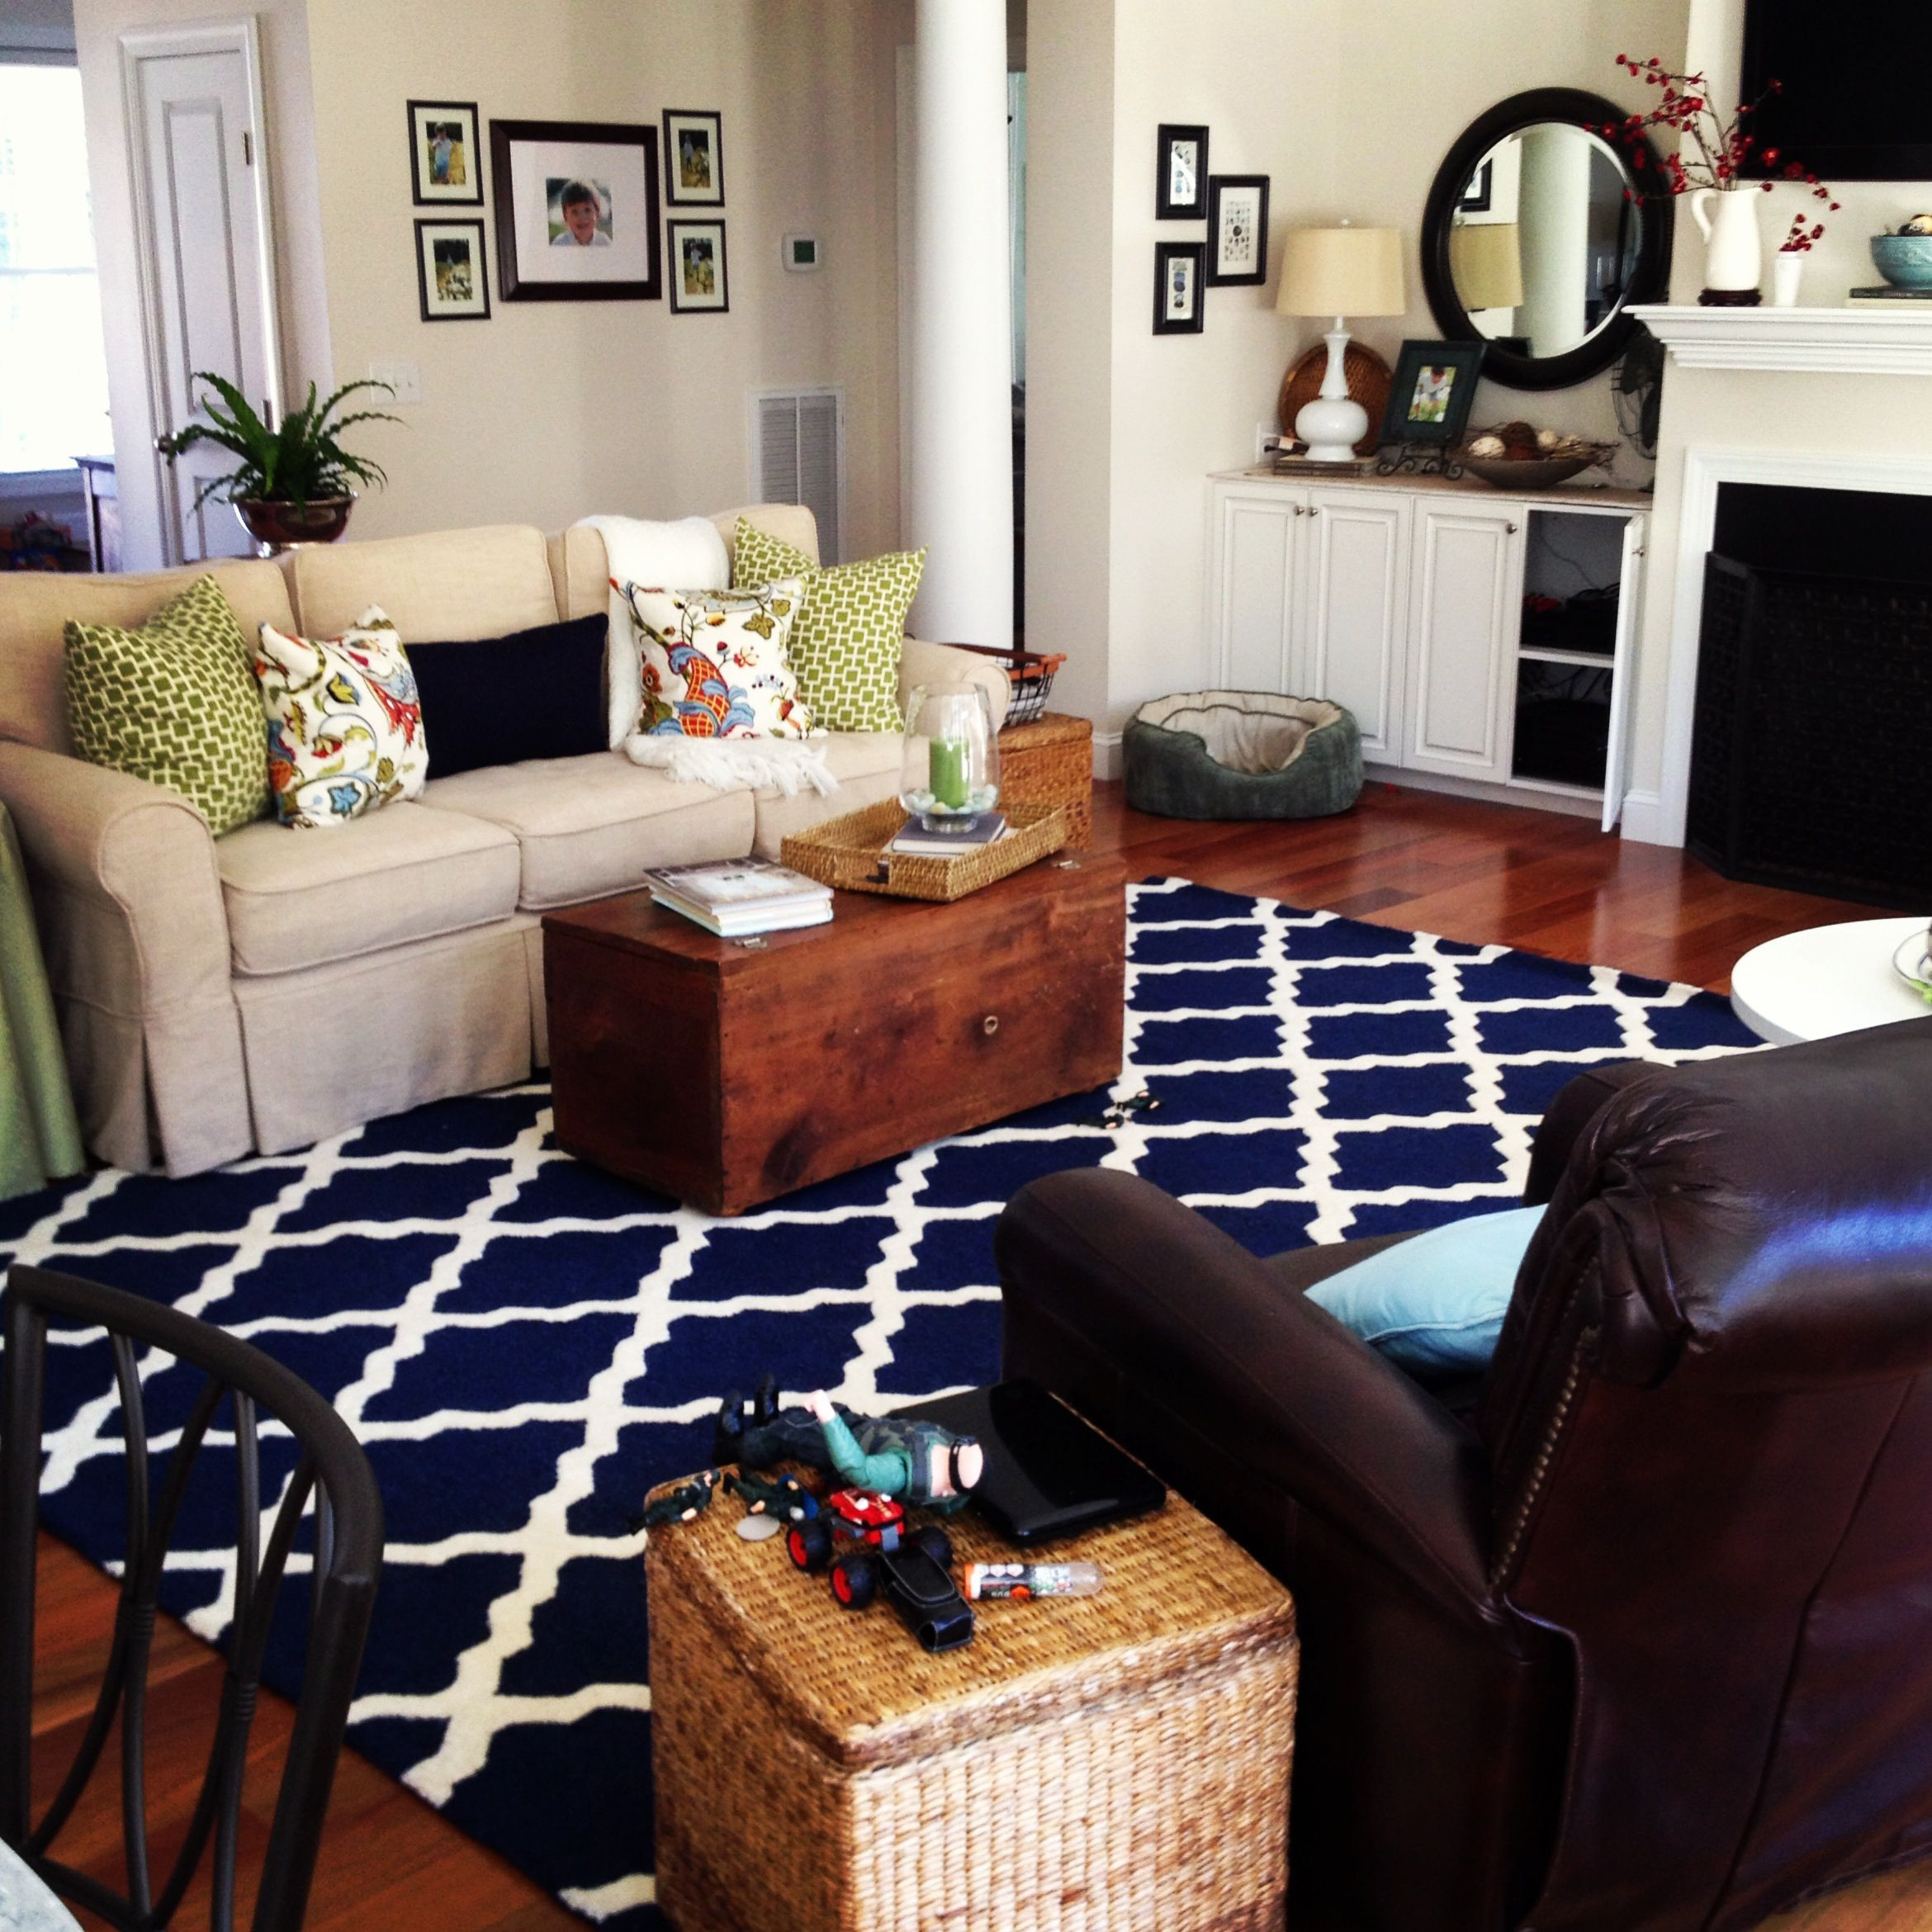 Rugs For Living Room Ideas
 Best 25 Living room rugs ideas on Pinterest